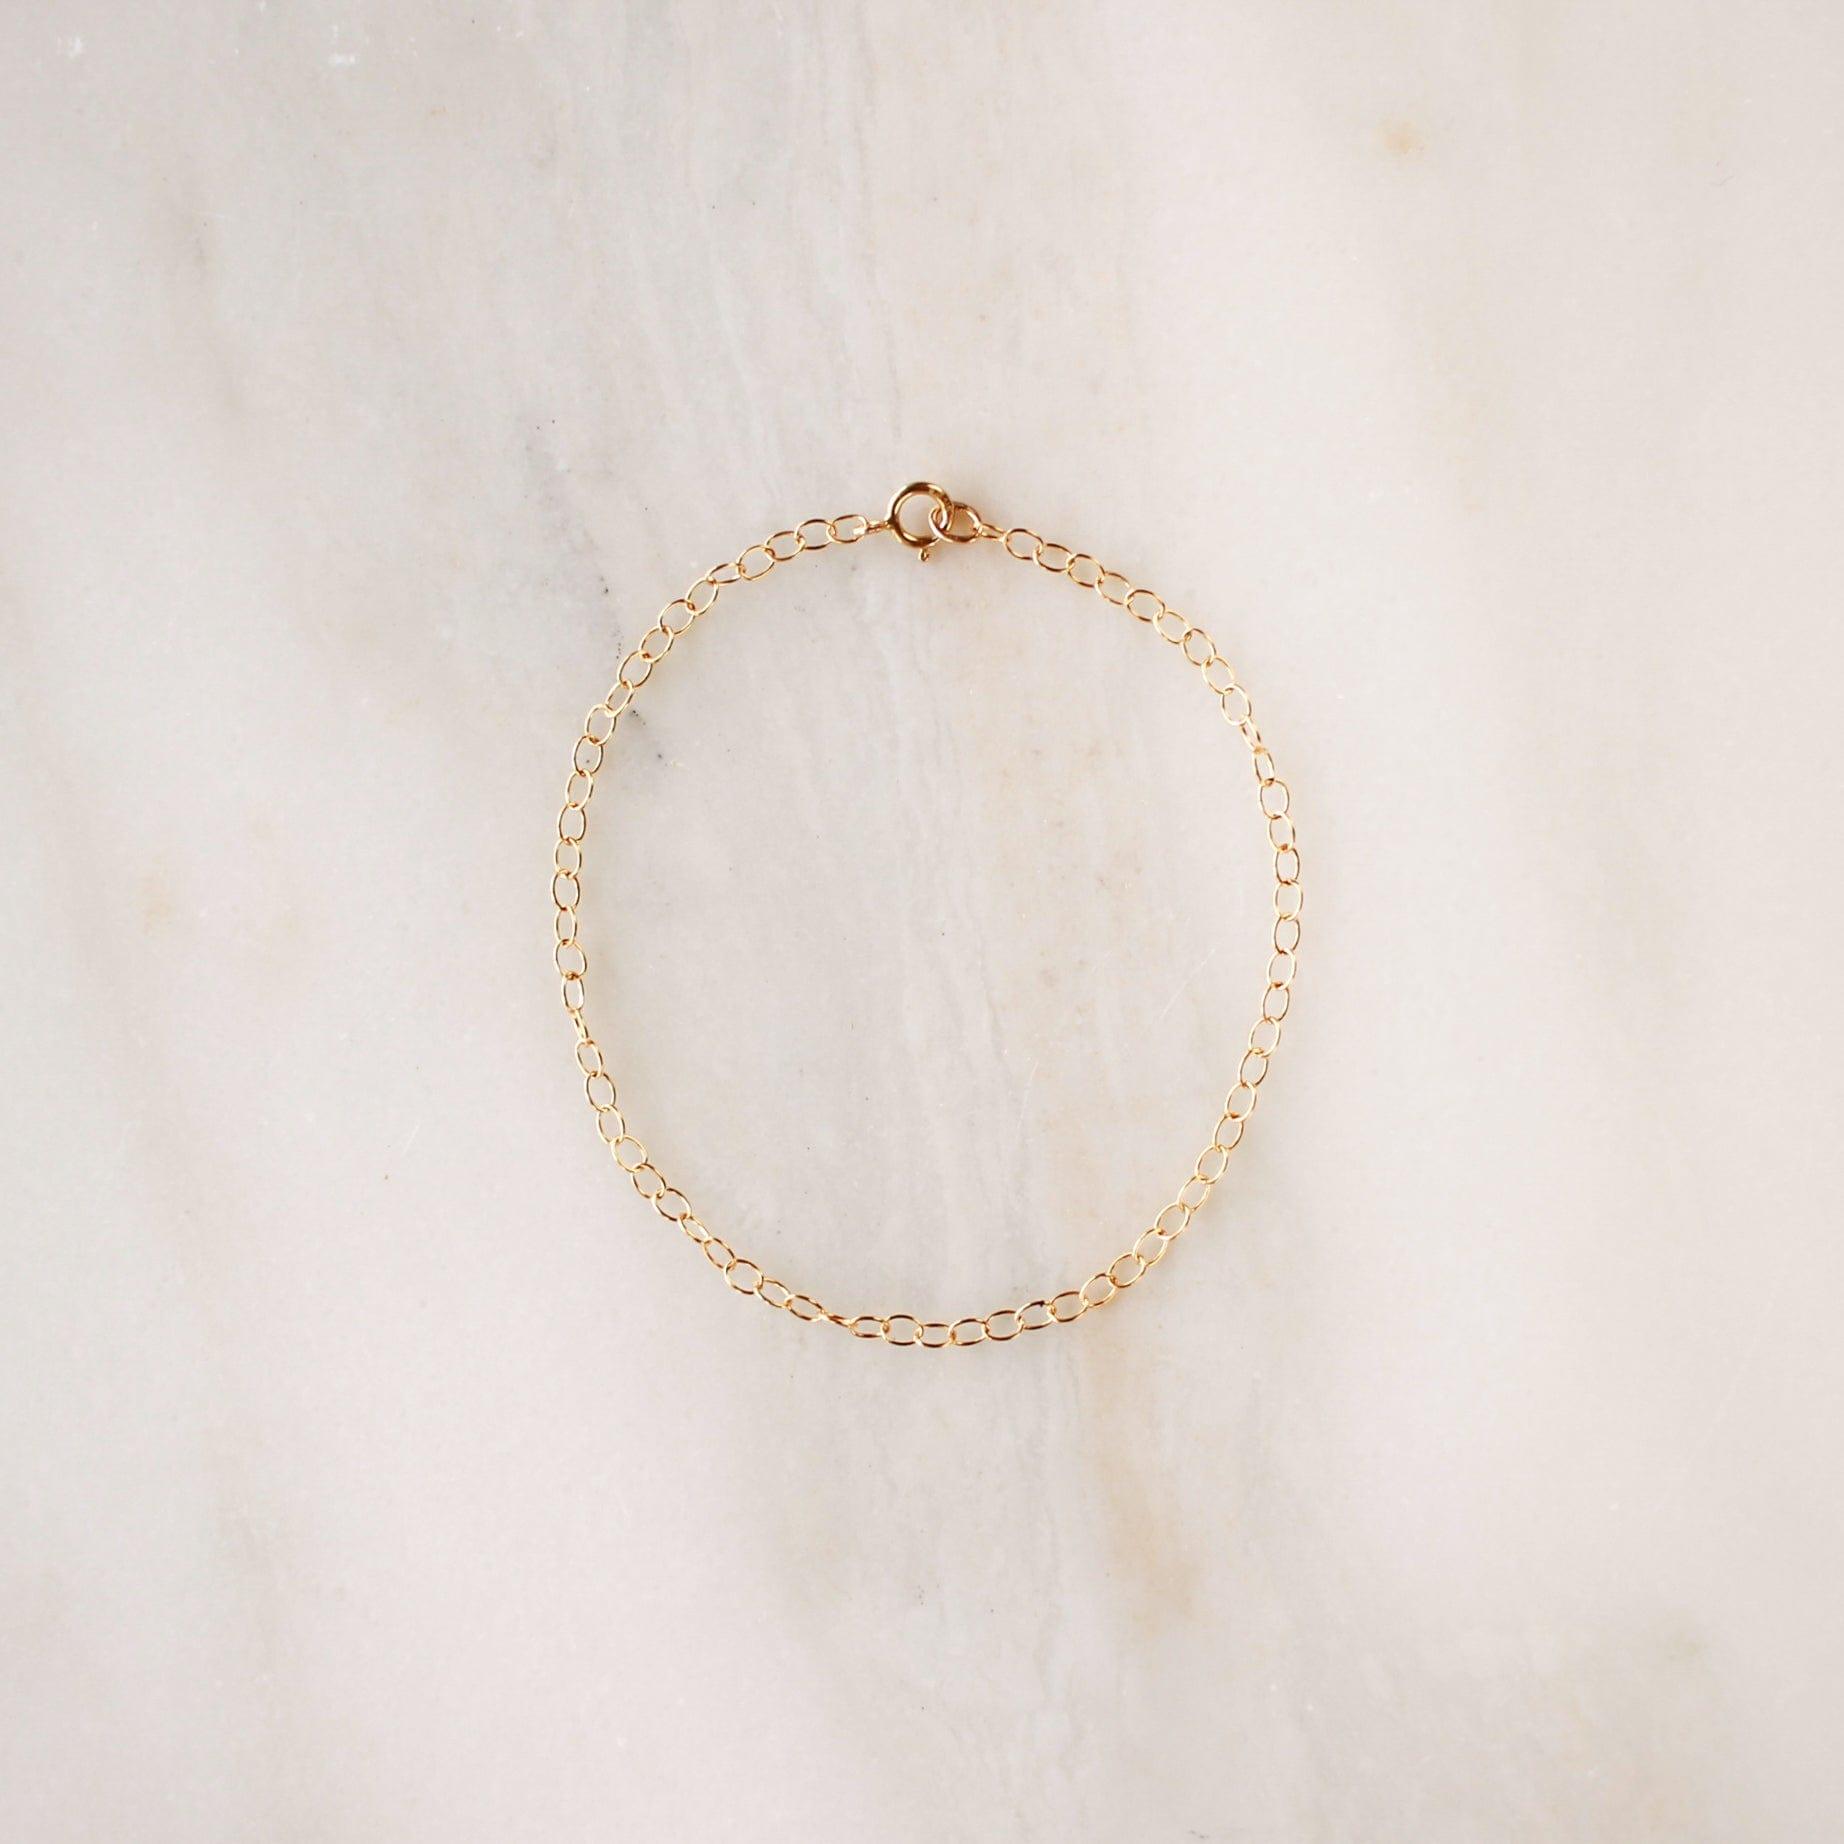 Minimalist Chain Bracelet - Nolia Jewelry - Meaningful + Sustainably Handcrafted Jewelry